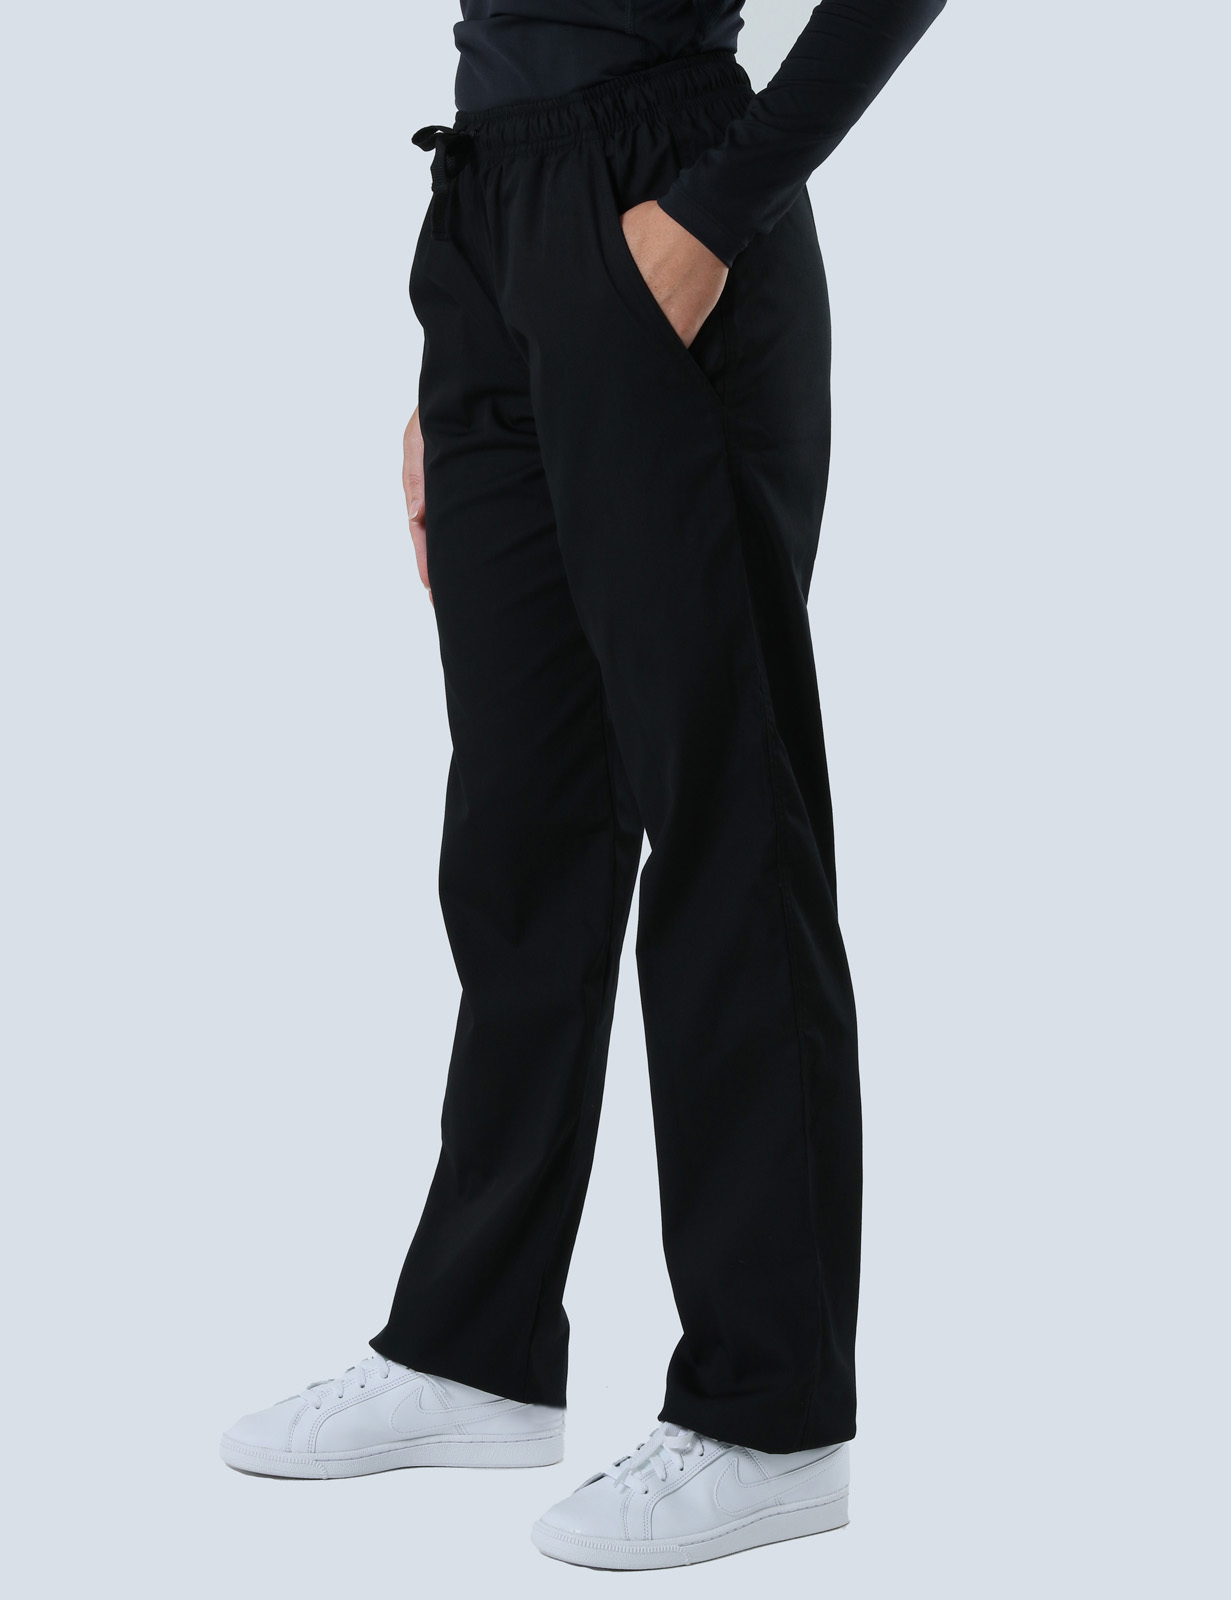 Women's Regular Cut Pants - Black - 5x Large